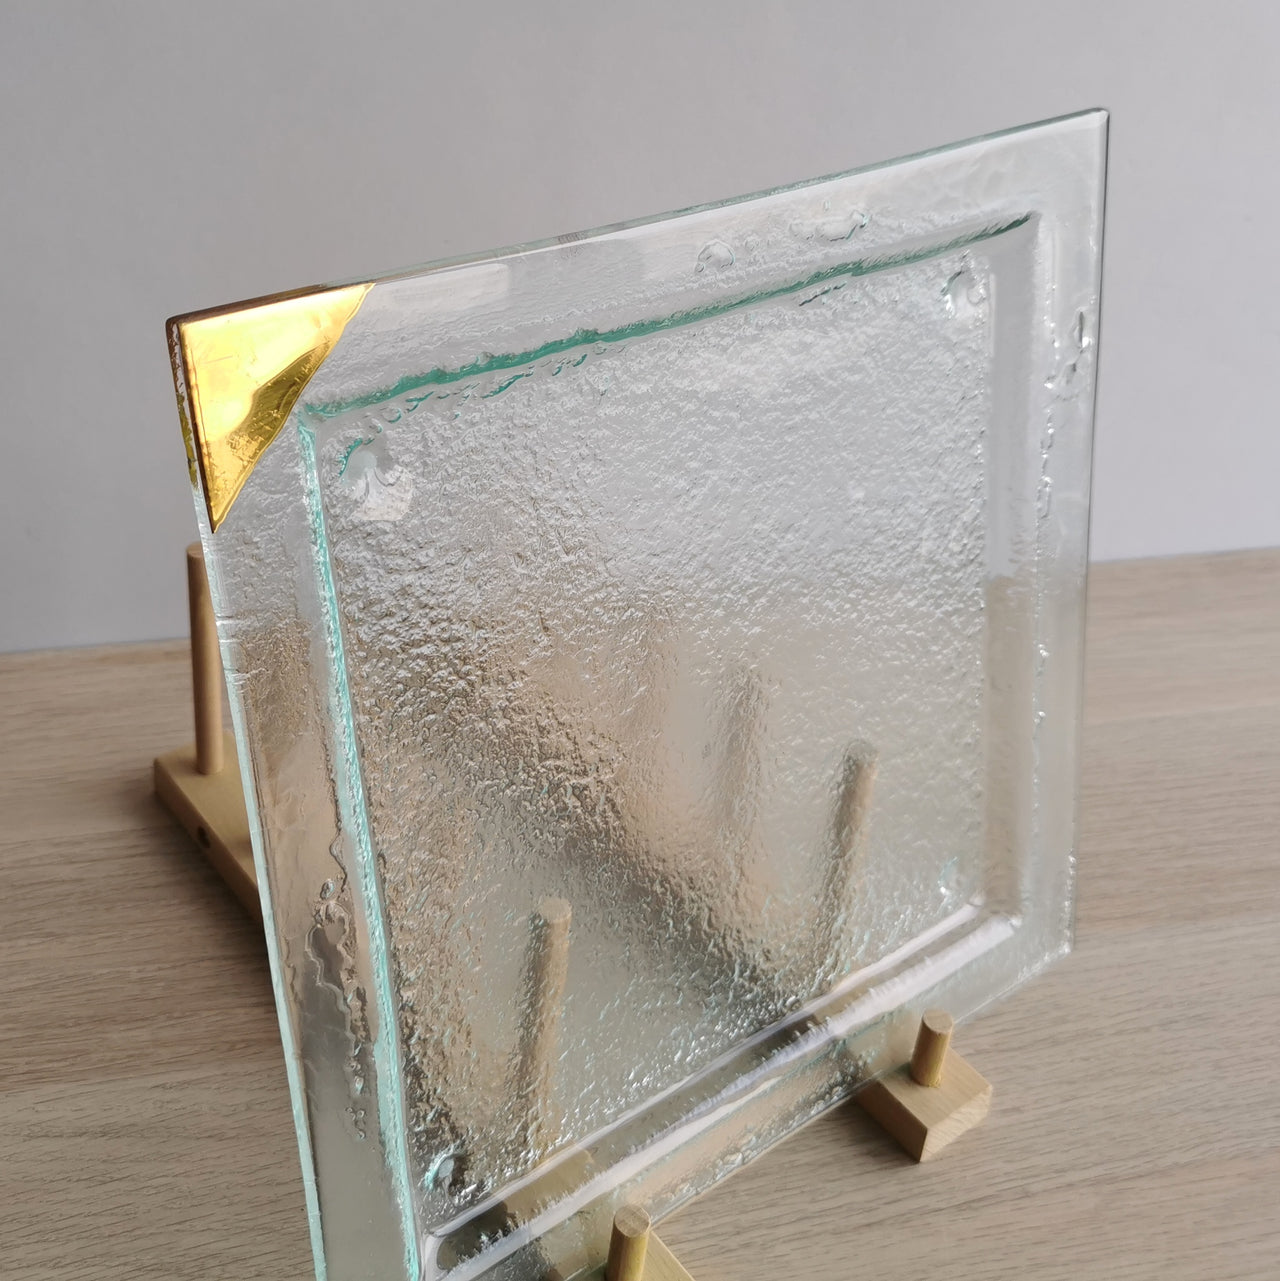 New York Minimalist Transparent&Gold Glass Main Course Plate. Transparent&Gold Glass Plate - 10 13/16"x10 13/16" (27,5cm.x27,5cm.)